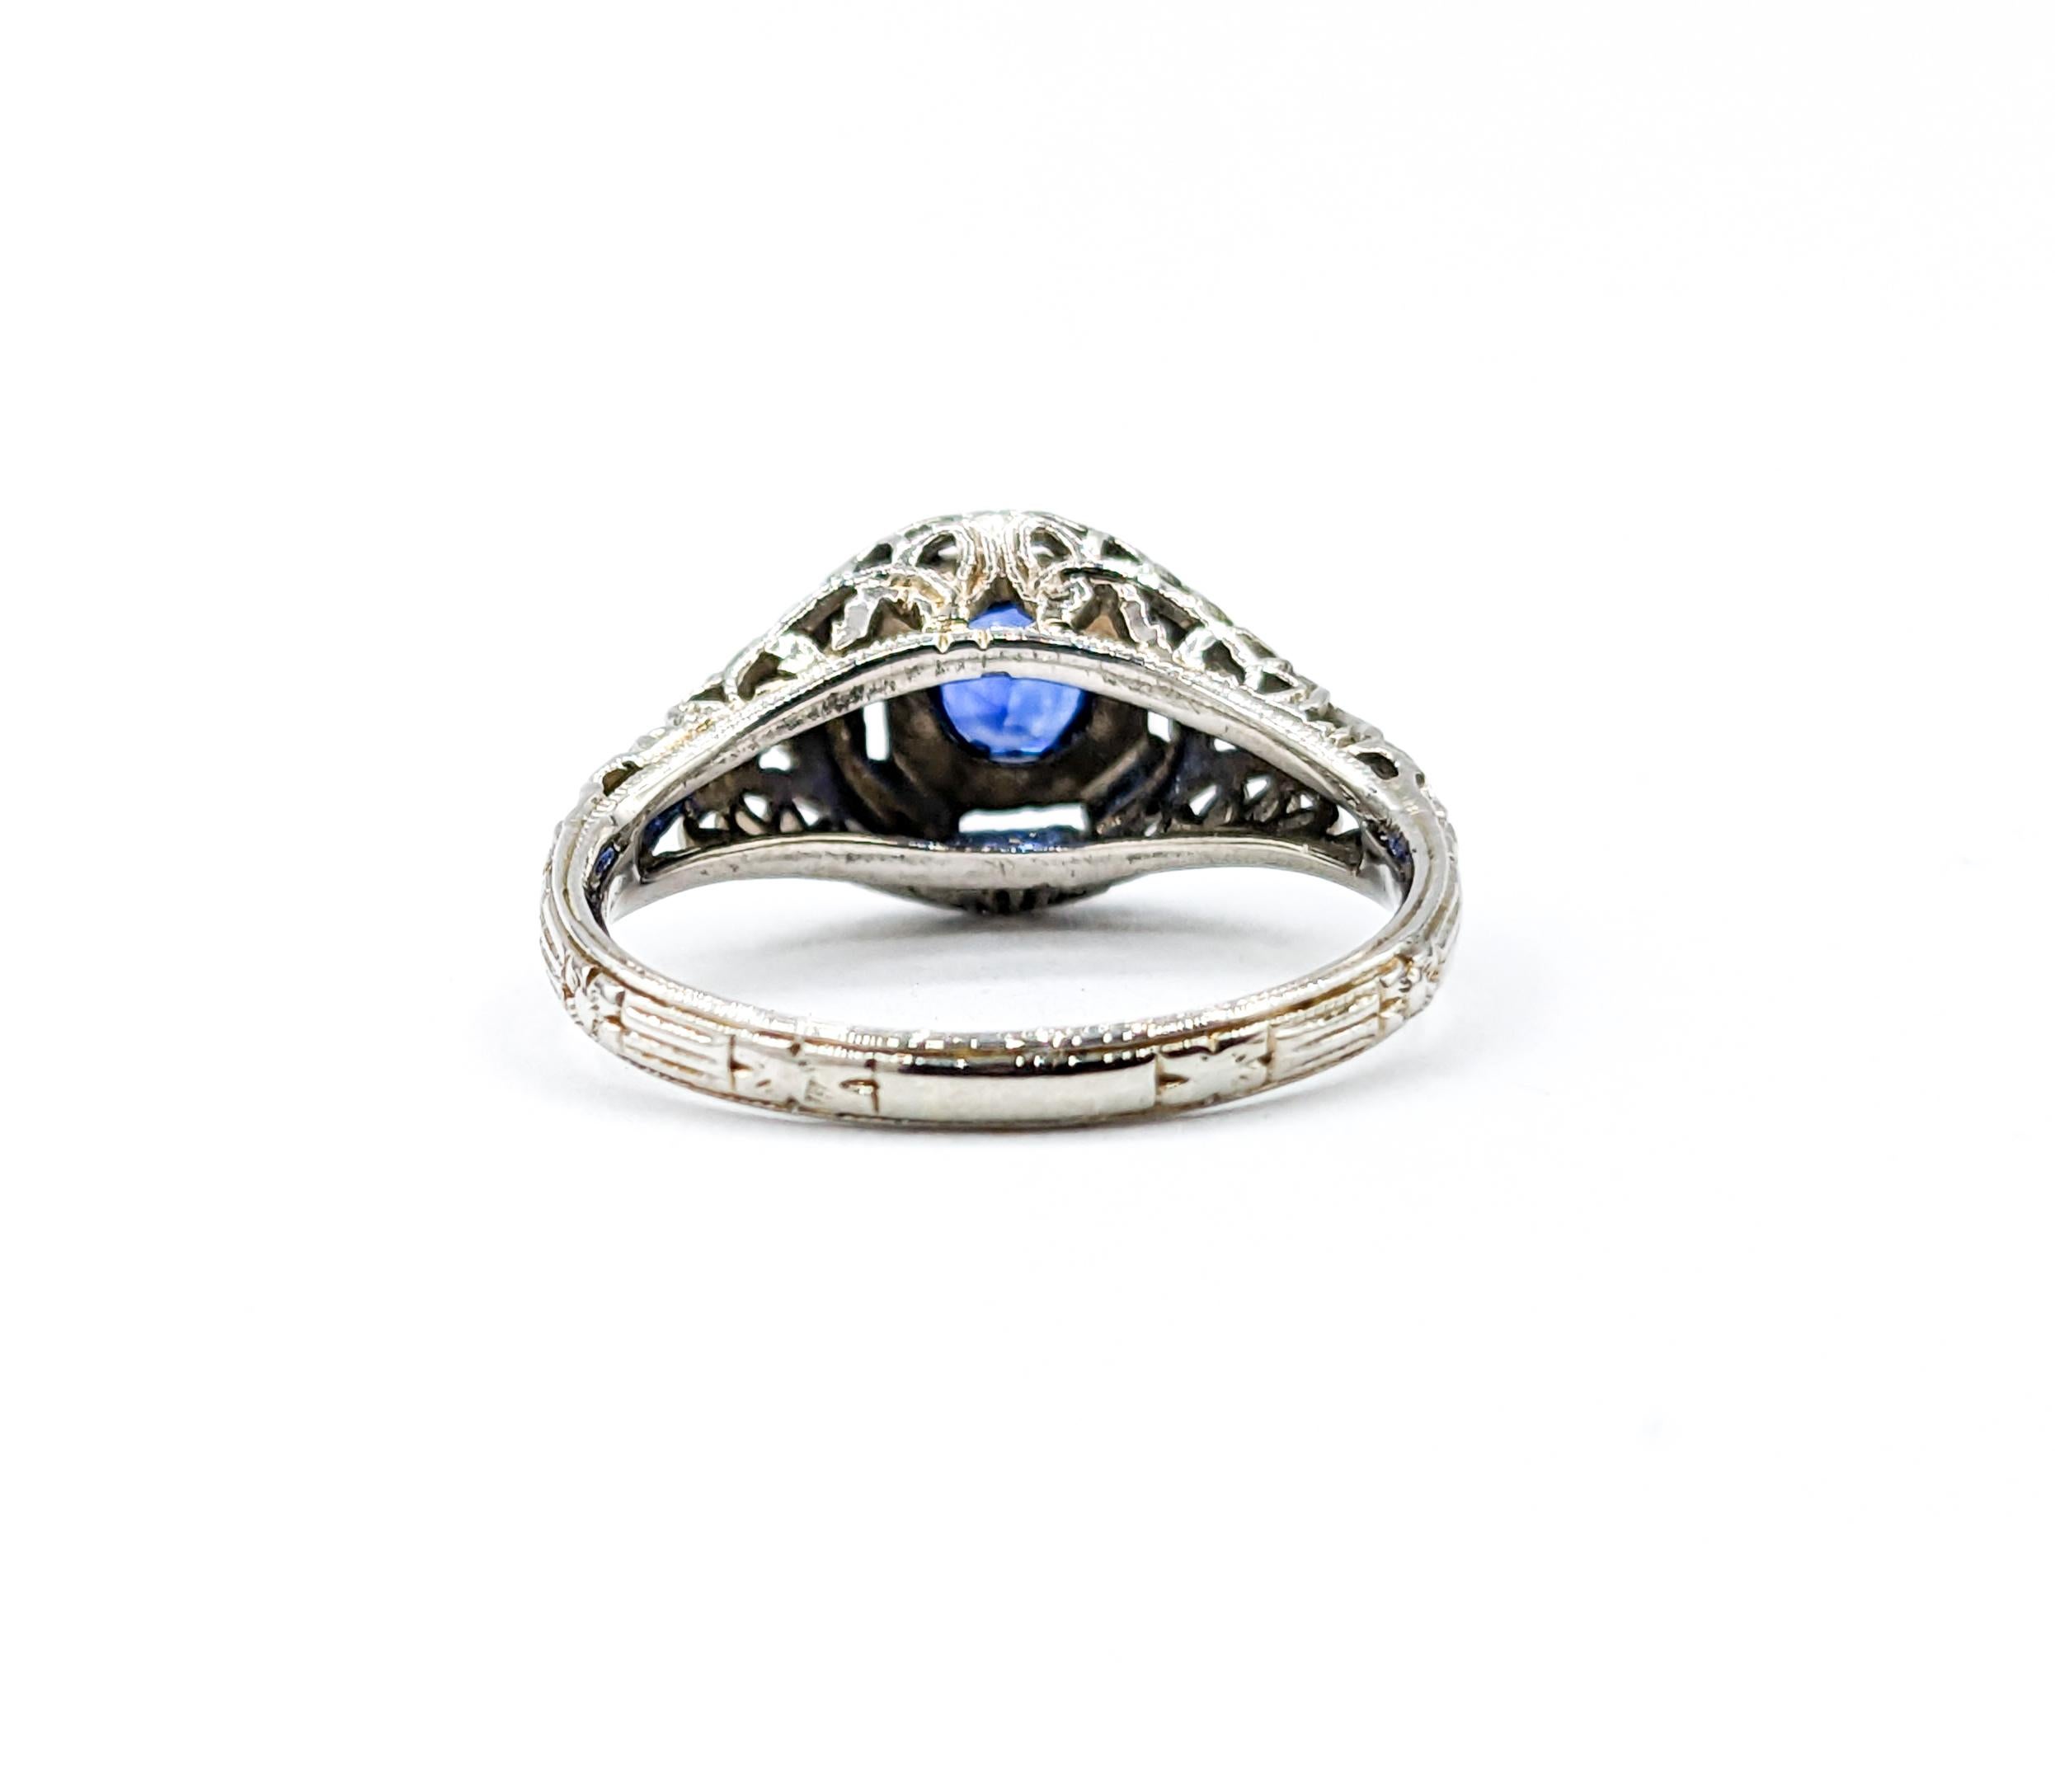 Antique Art Deco Filigree Sapphire Ring 18kt White Gold For Sale 1